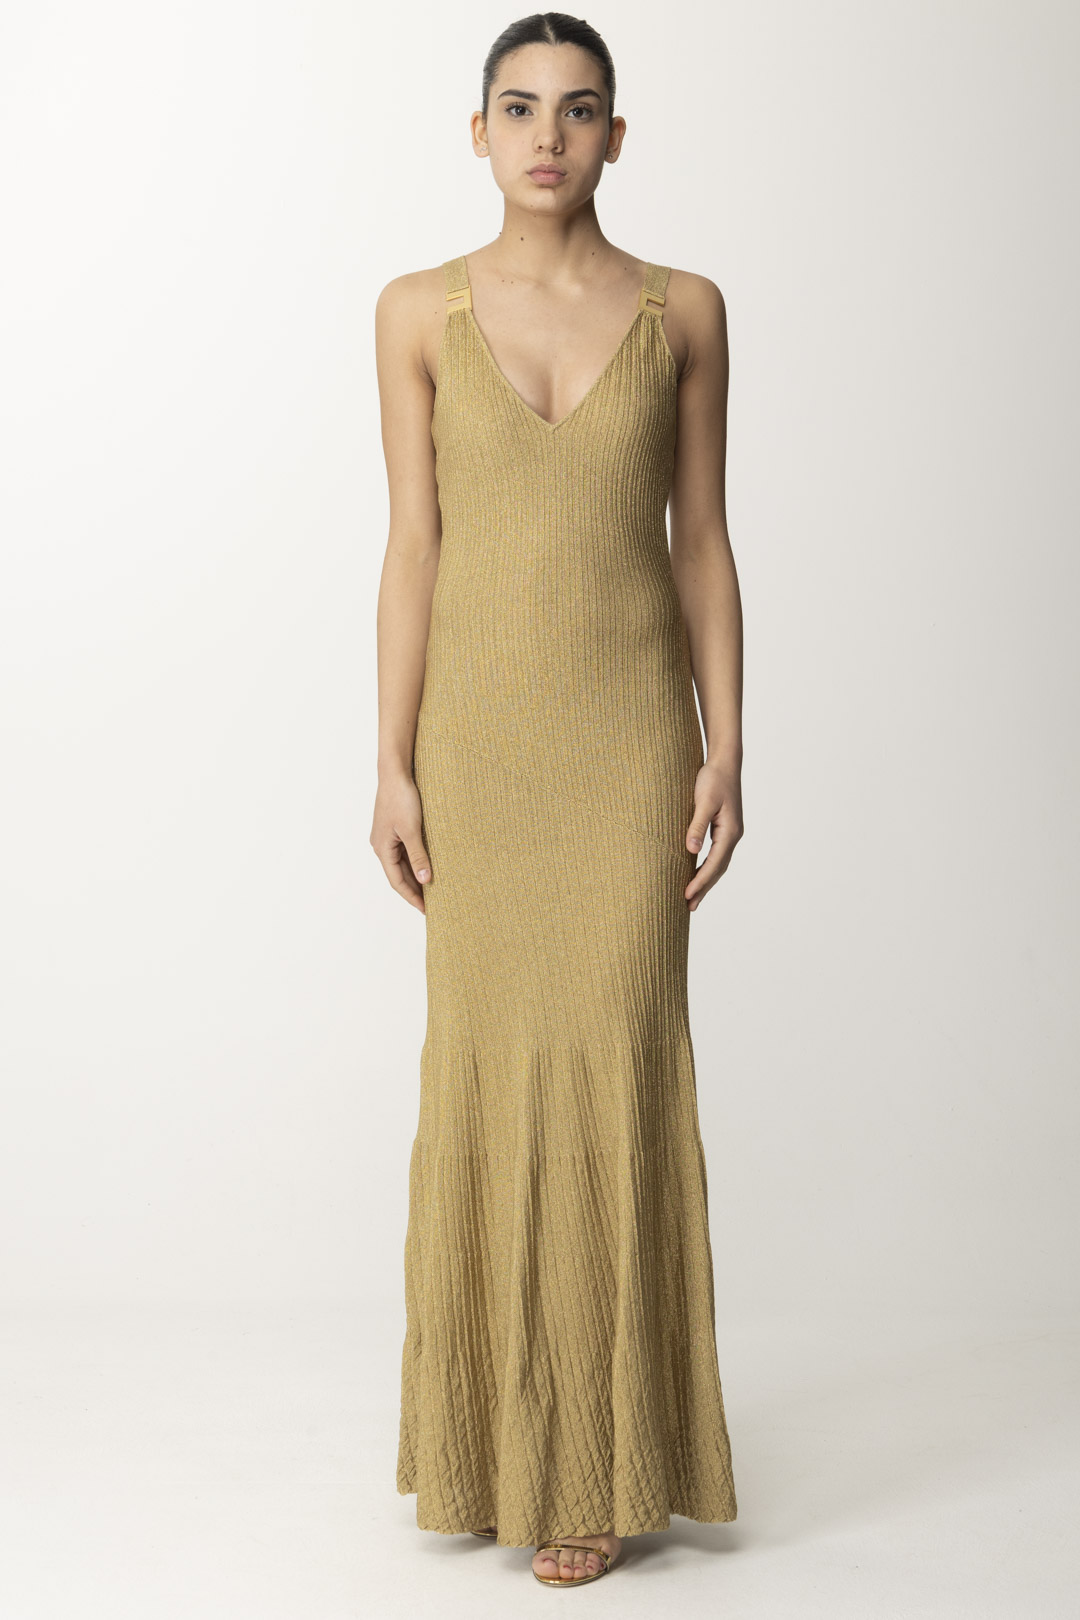 Preview: Elisabetta Franchi Metallic red carpet dress Oro